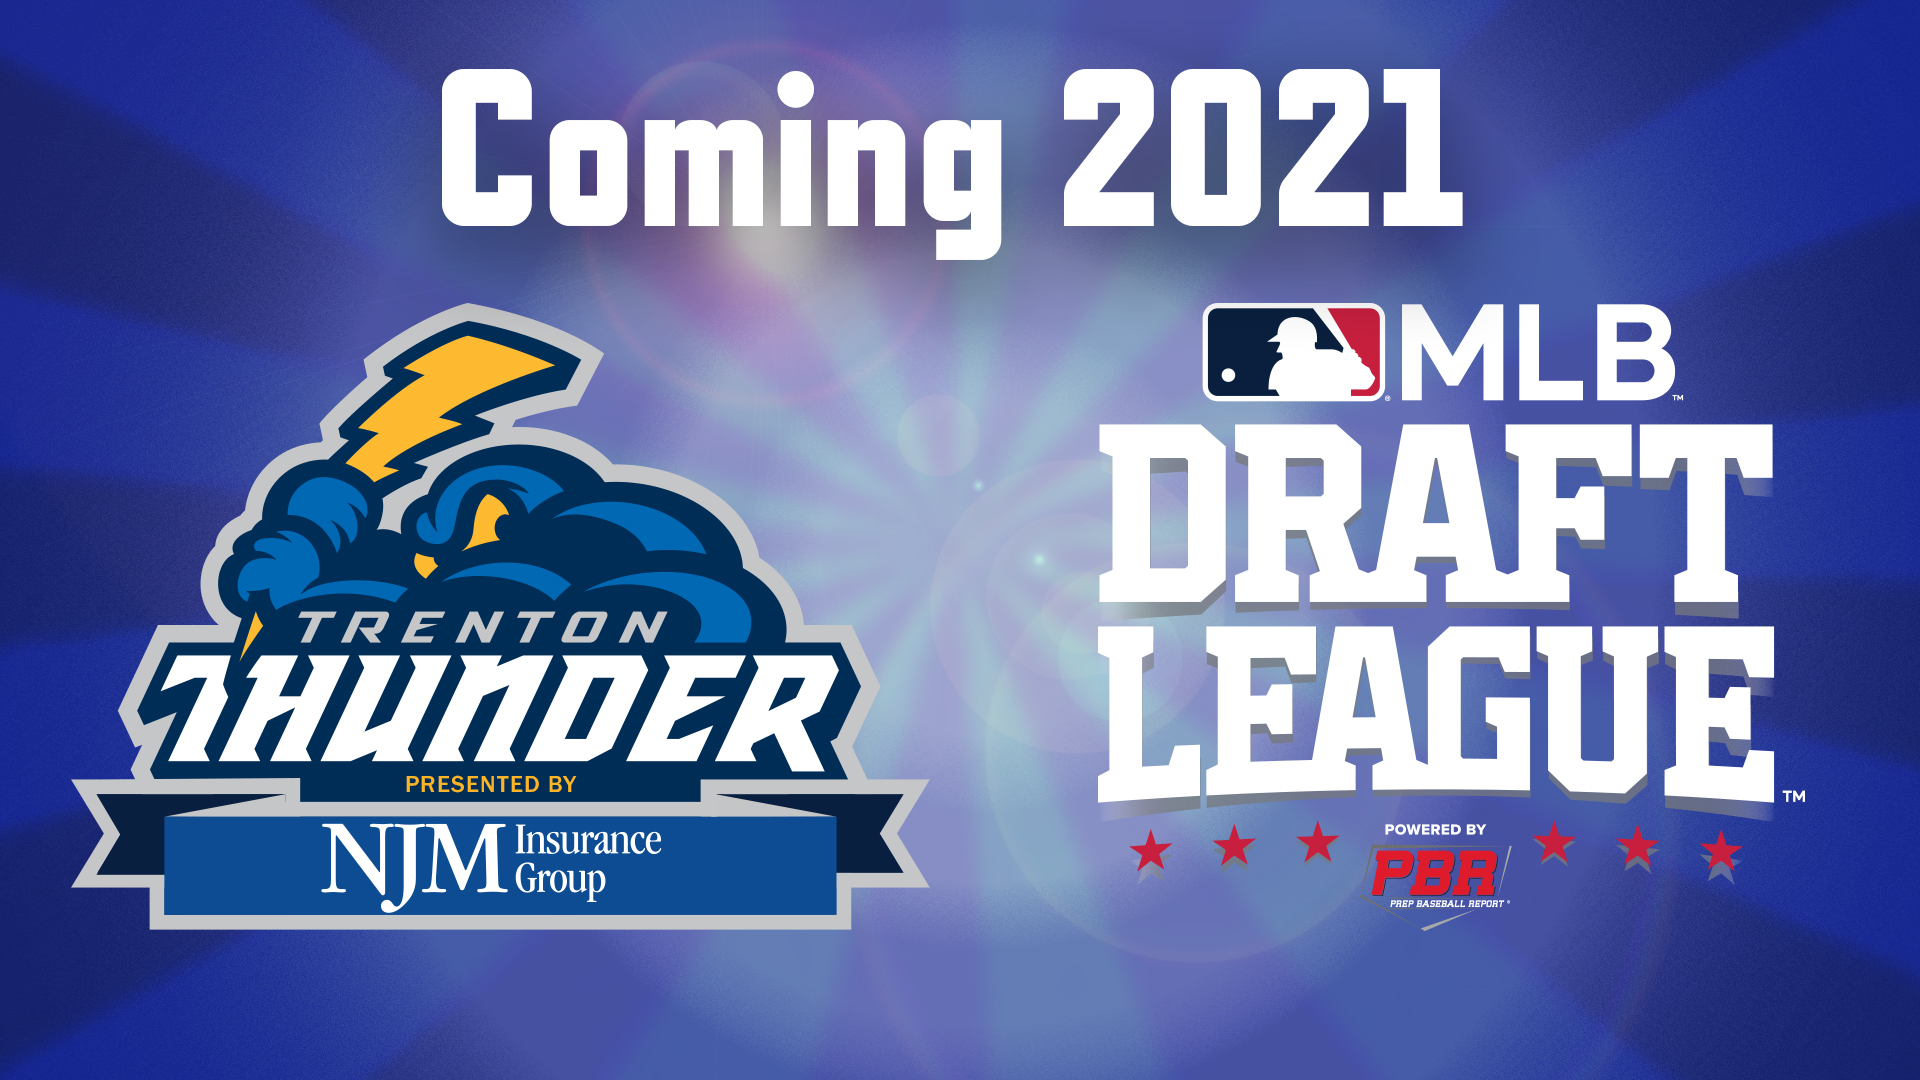 Trenton Thunder to be part of MLB Draft League BGMSportsTrax